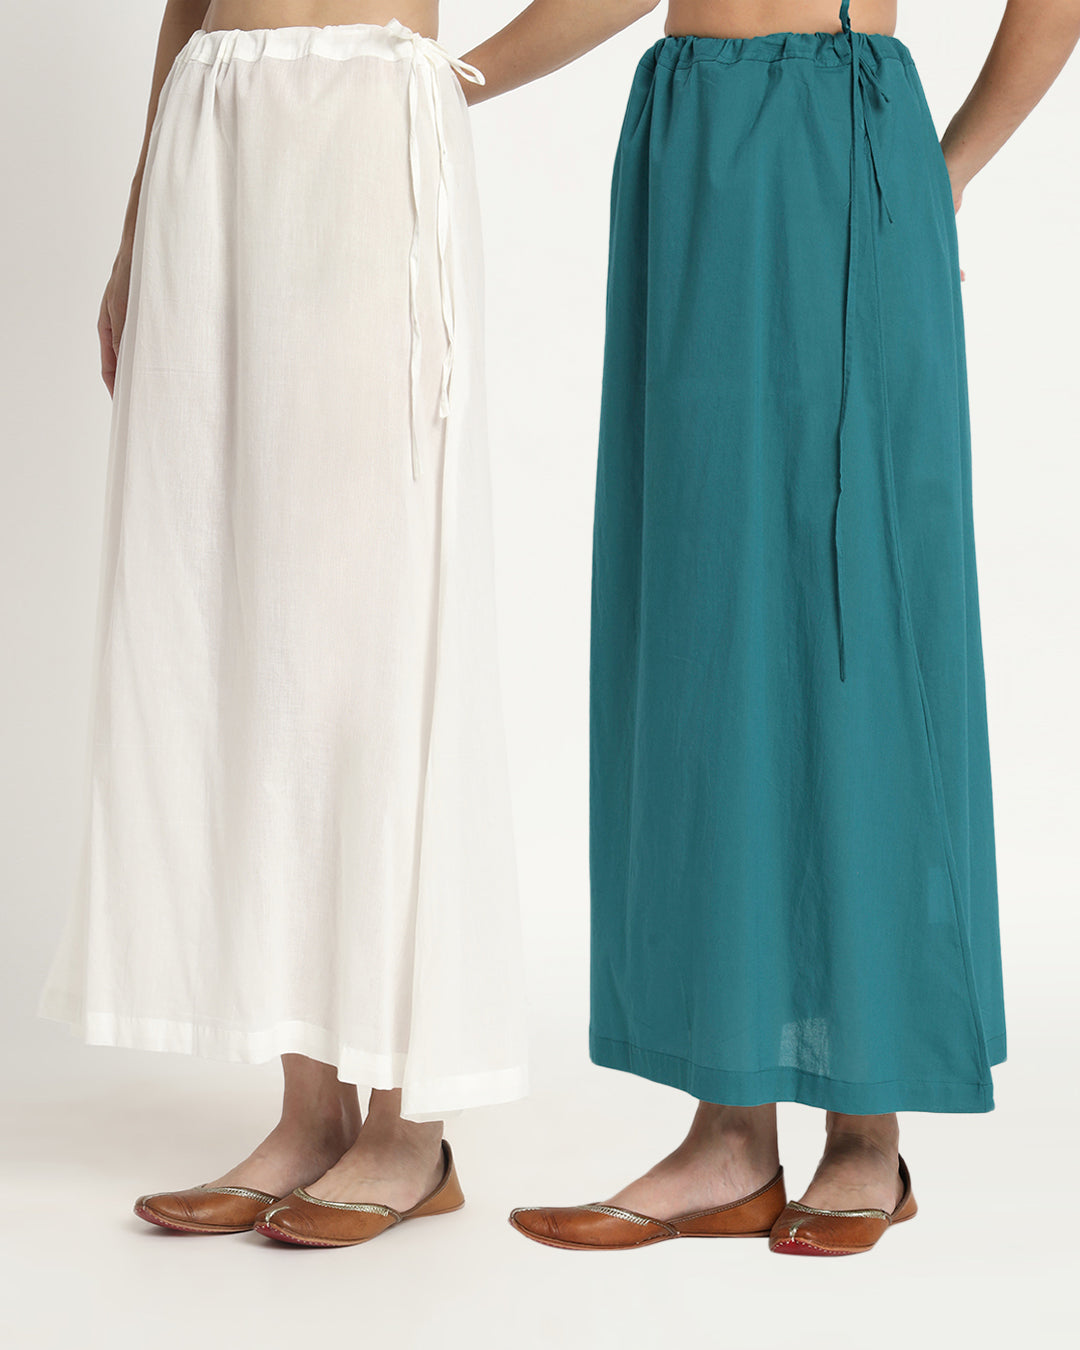 Combo: Pristine White & Green Gleam Peekaboo Petticoat- Set of 2